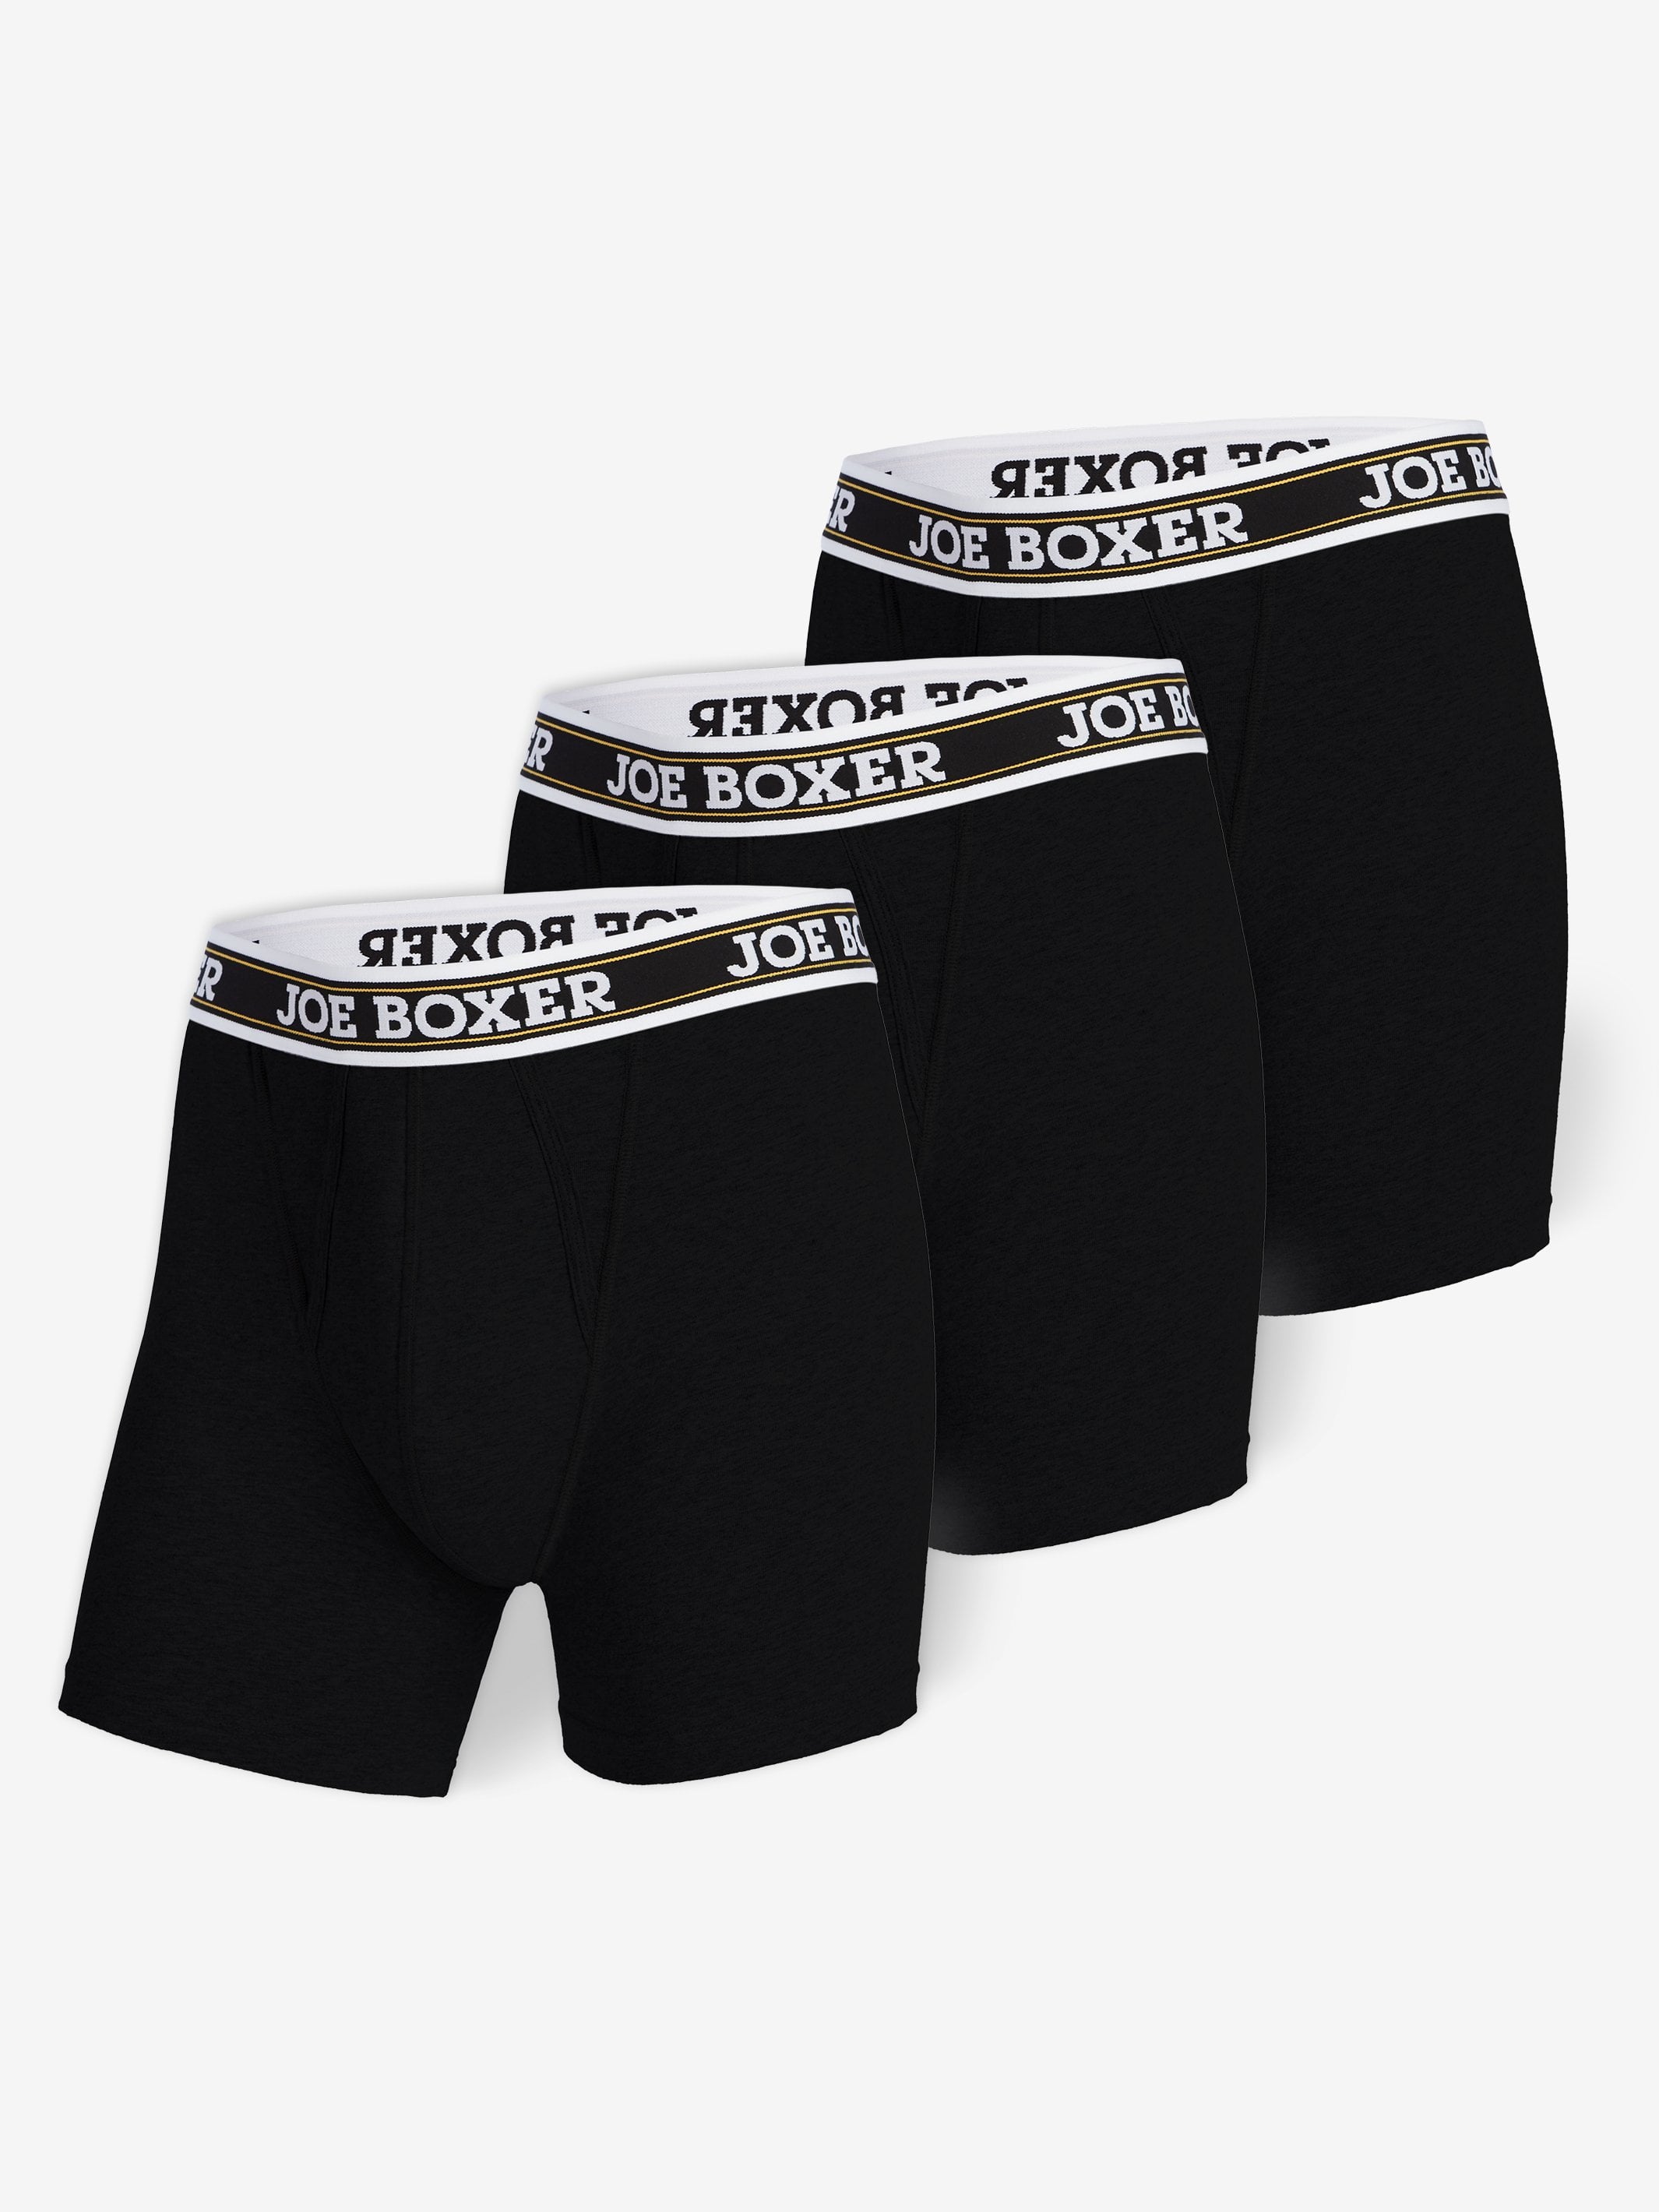 Wrangler Mesh Quick Dry Comfort Stretch Mens Boxer Briefs, Mens Underwear 6  Pack : : Everything Else